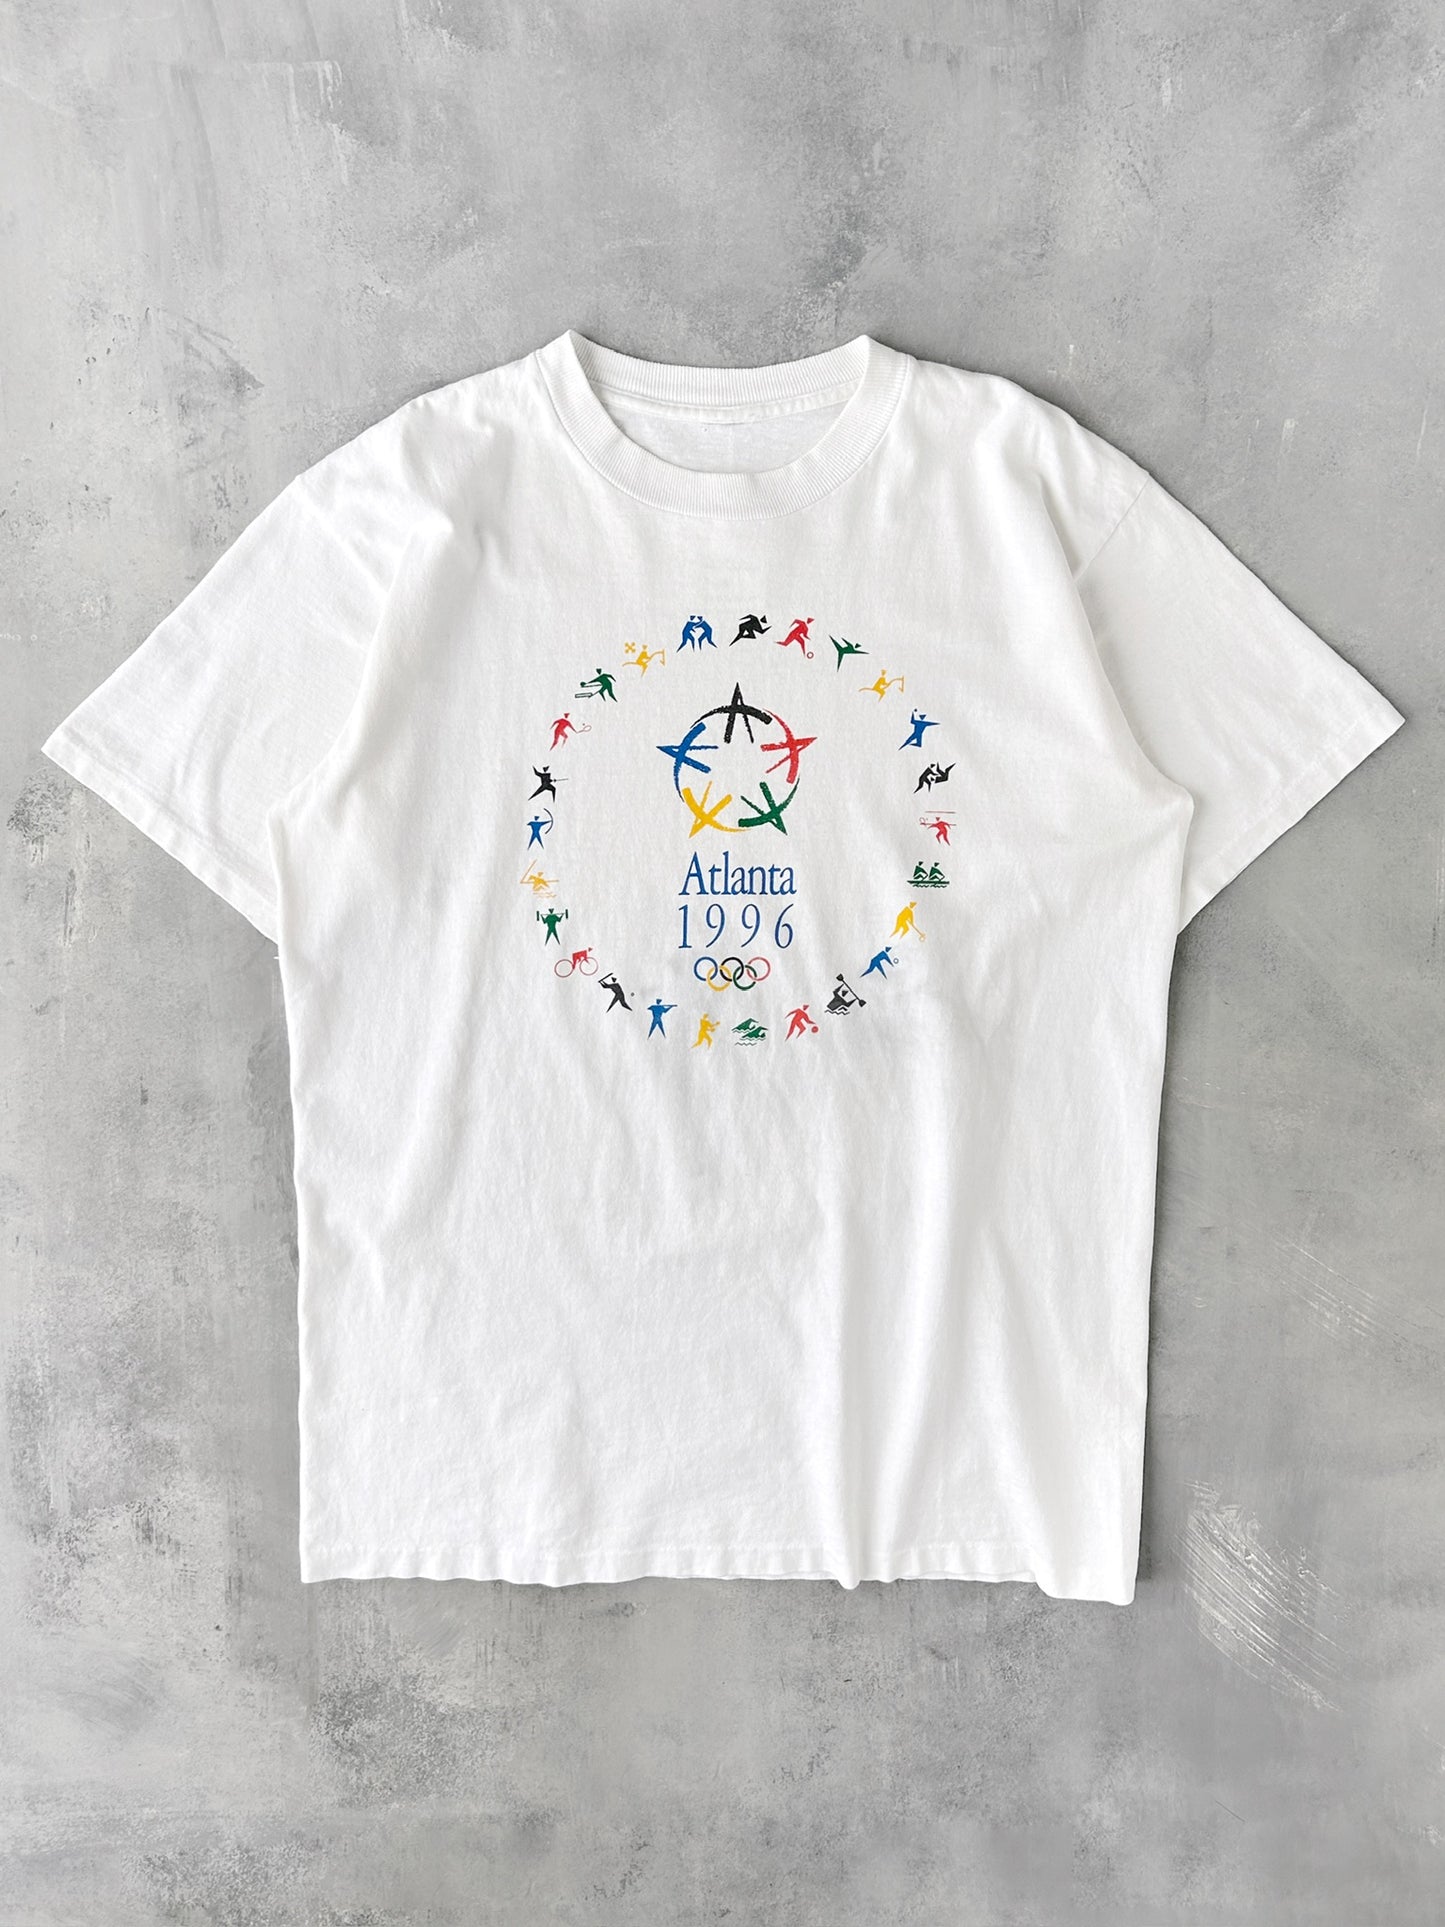 Atlanta Olympics T-Shirt '96 - XL